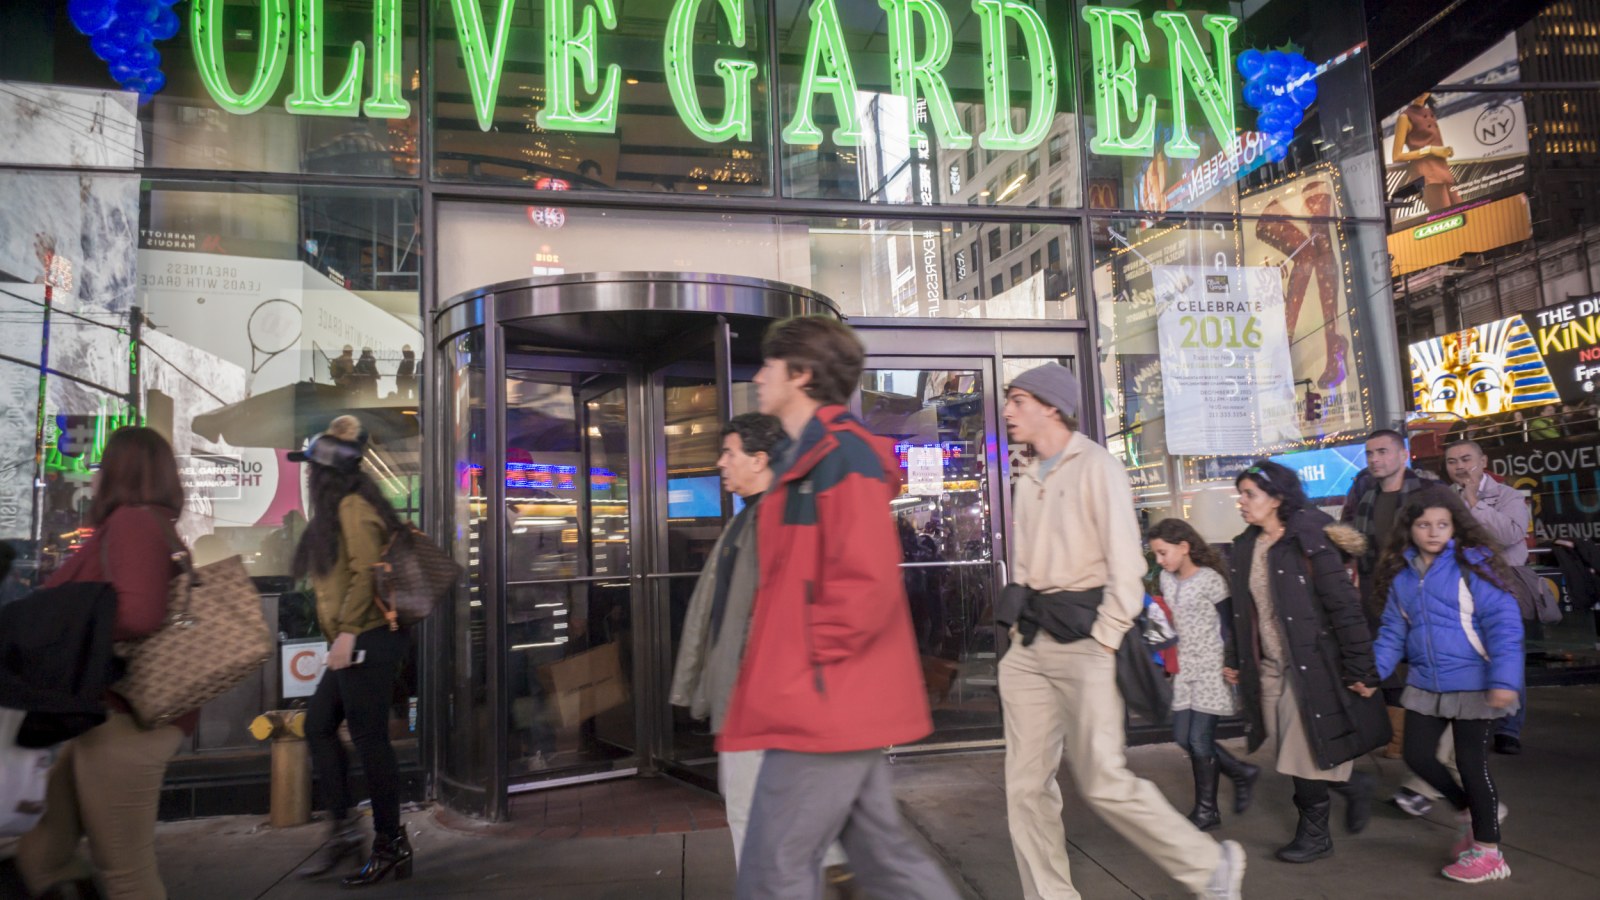 Olive Garden Manager Who Allegedly Let White Diner Refuse Service